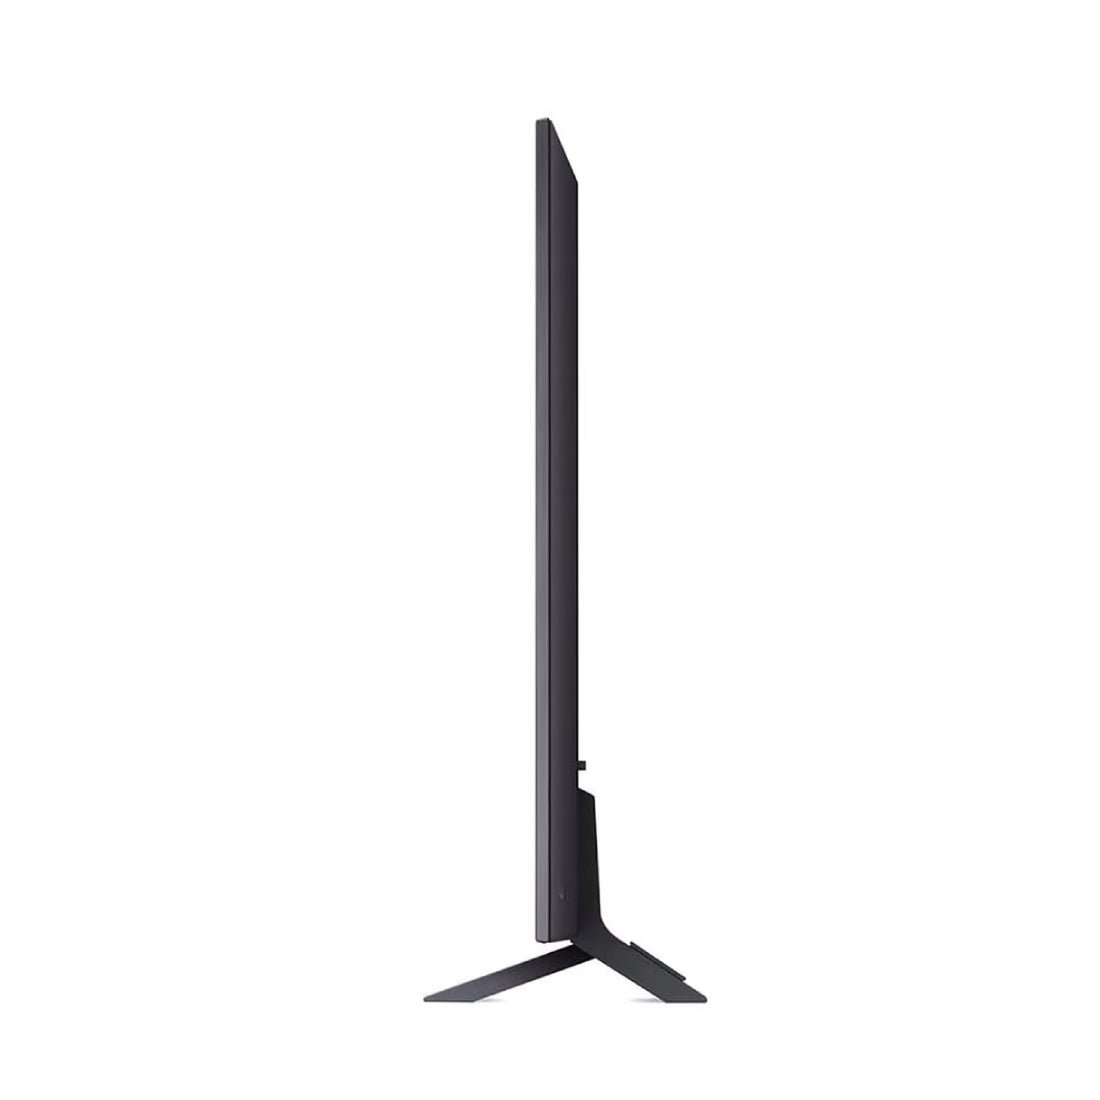 LG QNED 806 series 65'' 4K Quantum Dot & Nanocell 120Hz Smart TV - Black - Store 974 | ستور ٩٧٤